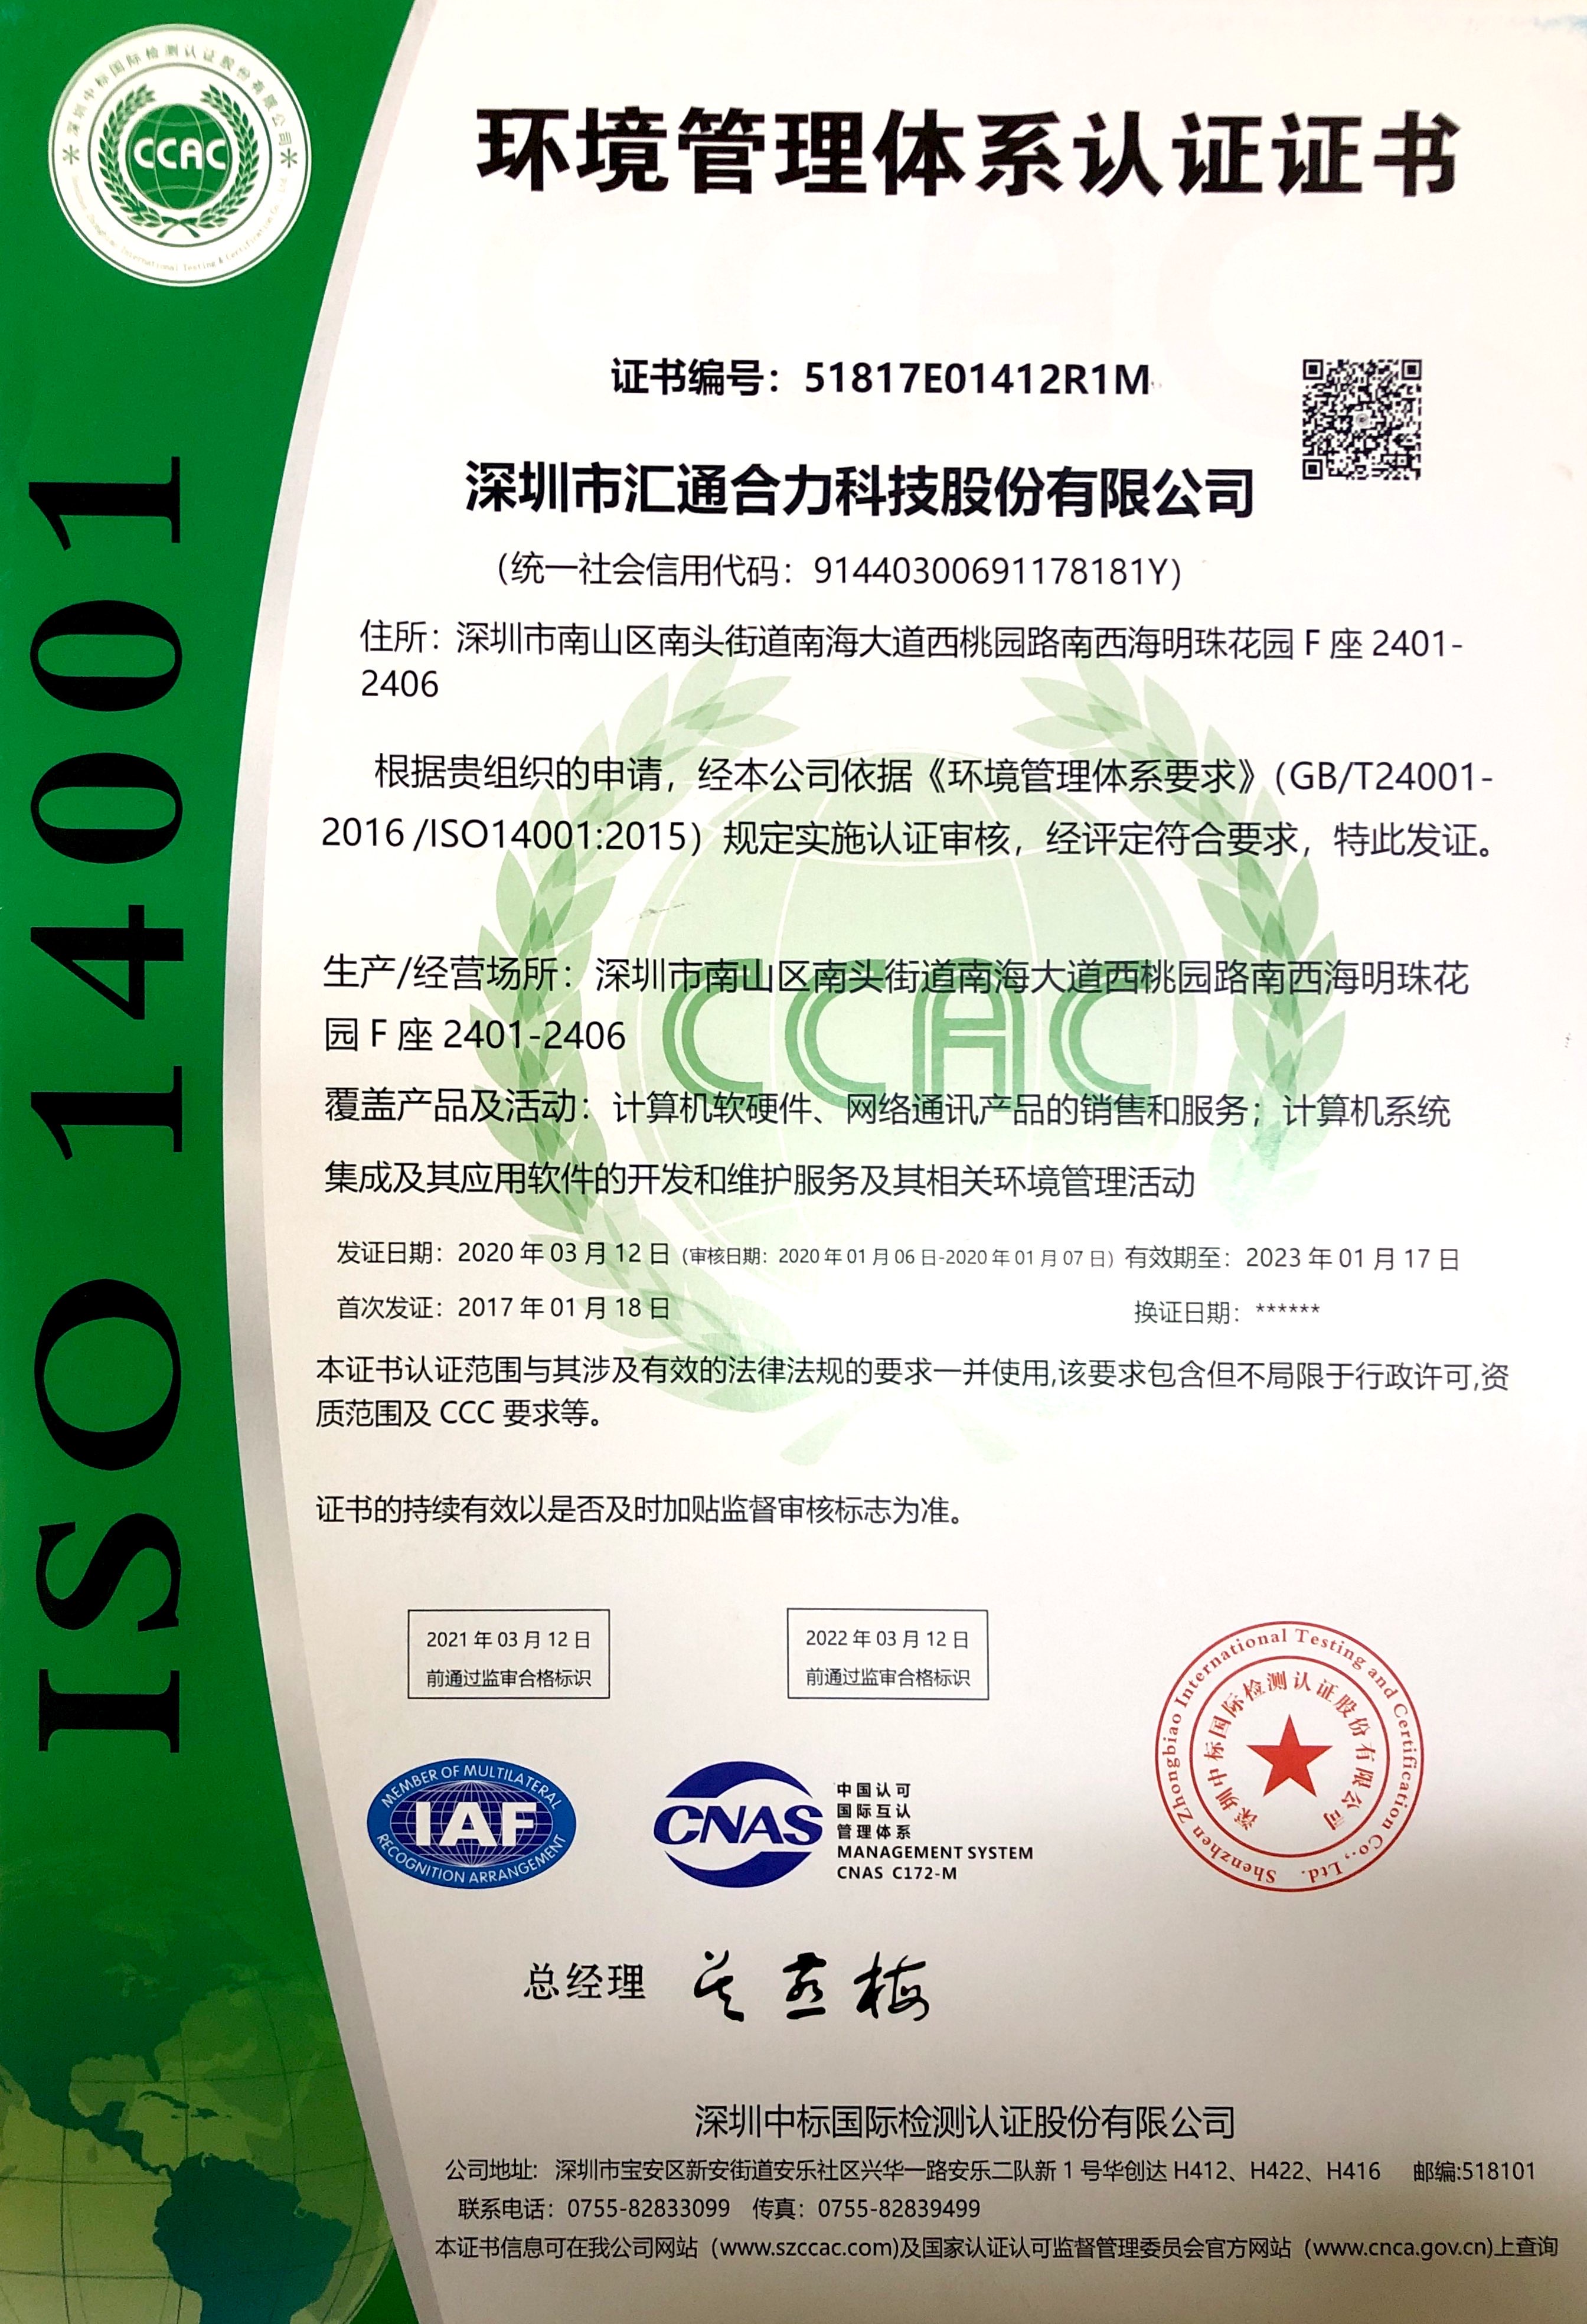 ISO14001 環境管理體系認證證書